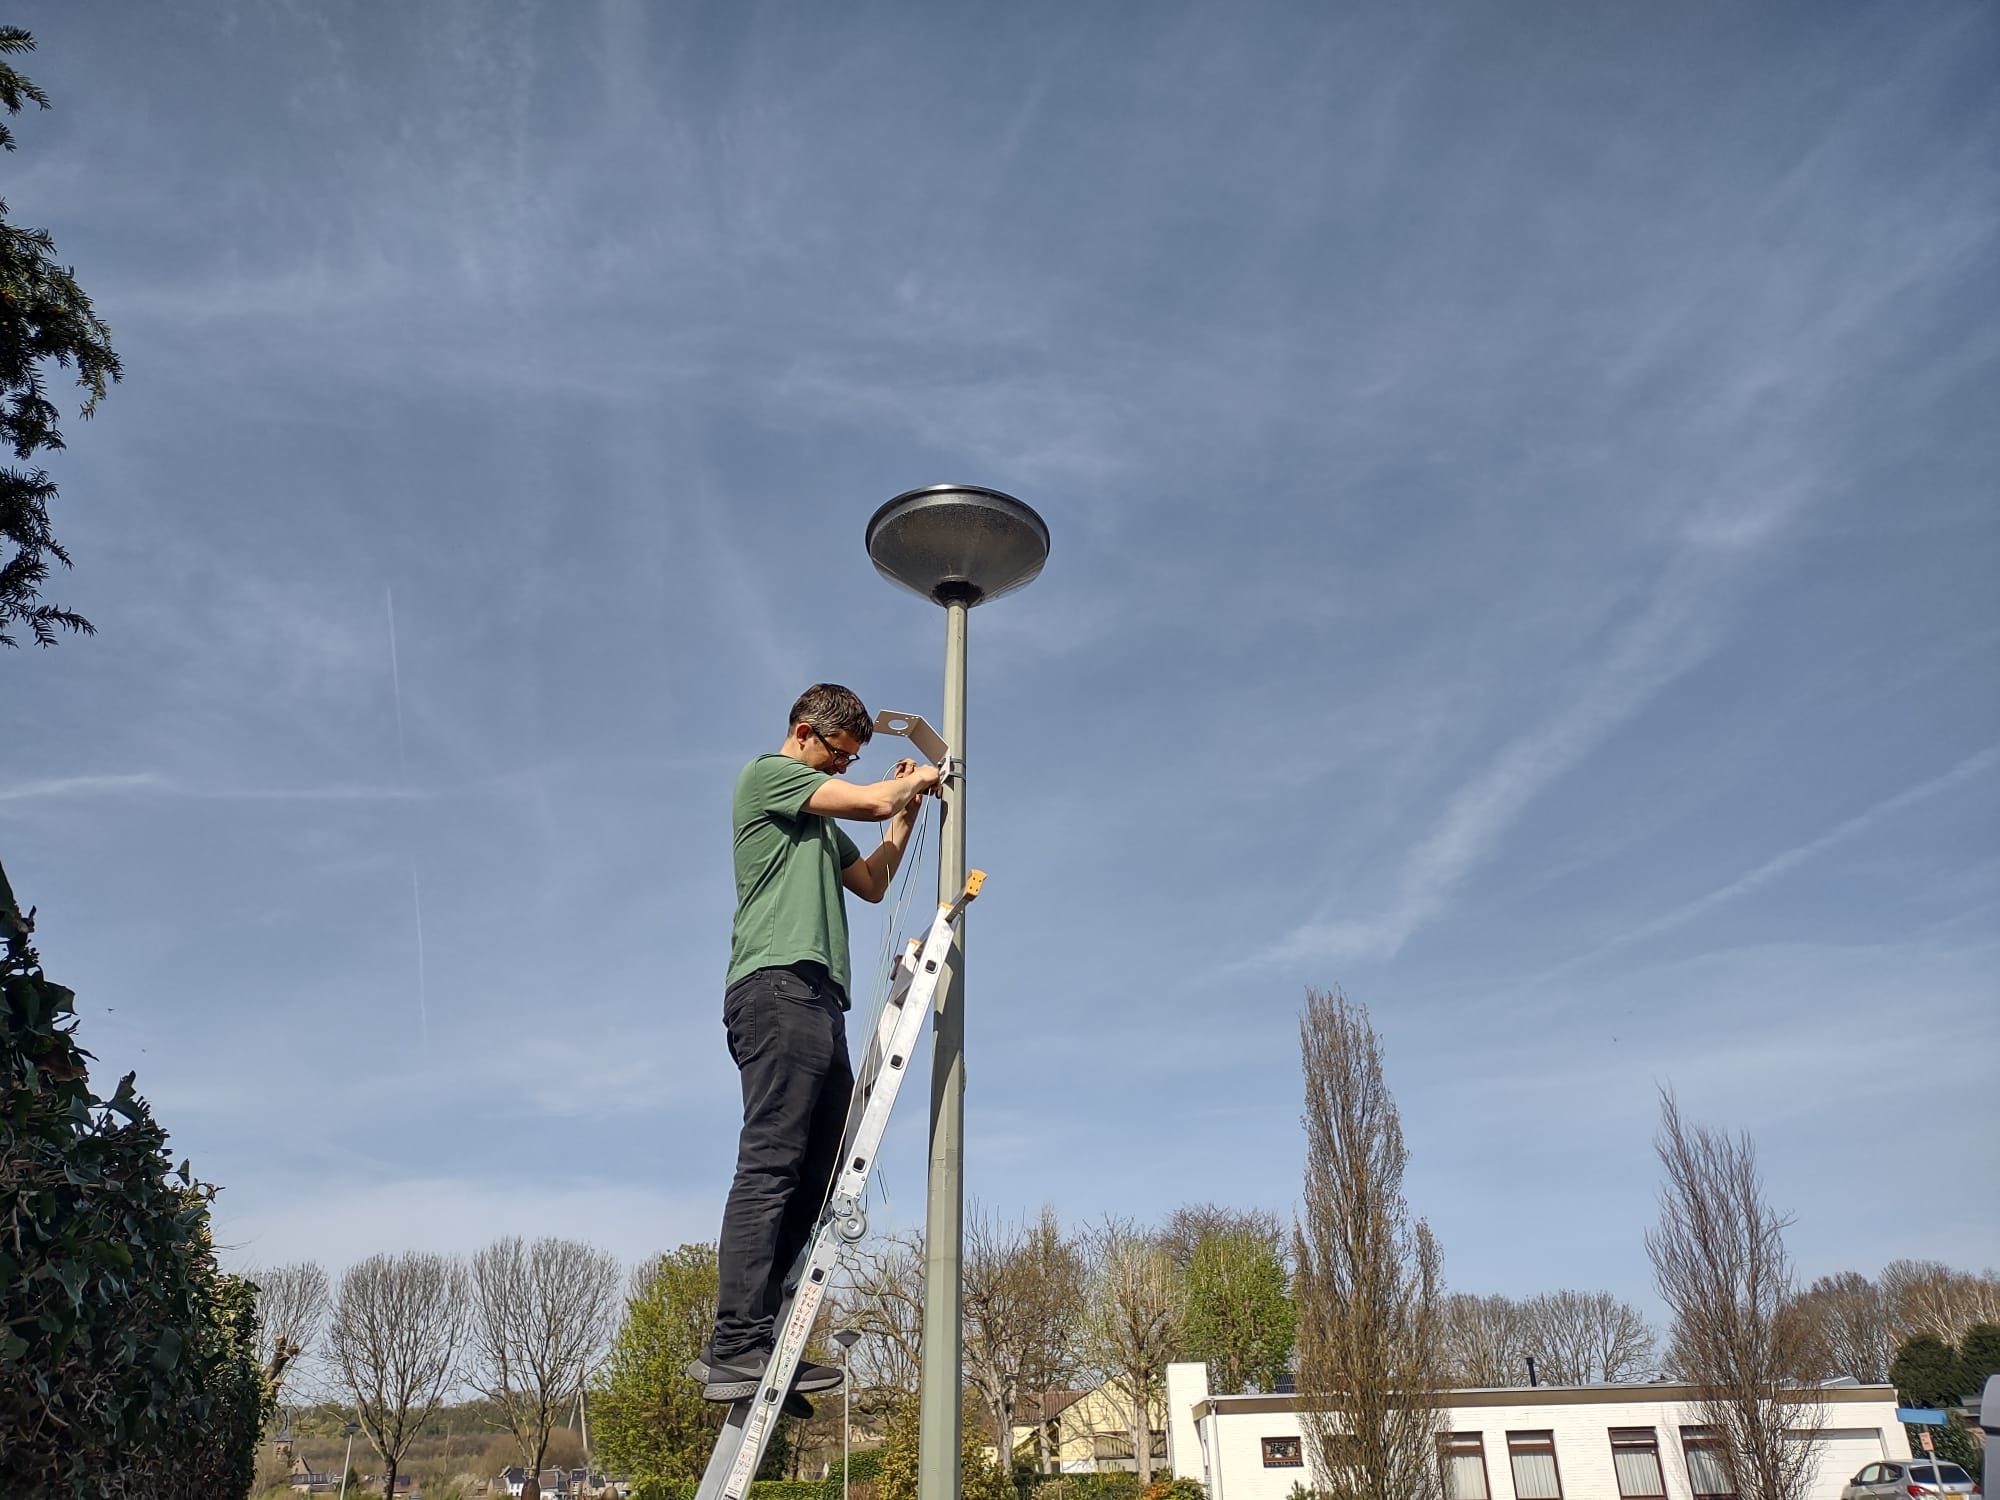 Man op ladder installeert meetapparatuur luchtkwaliteit aan lantaarnpaal. 